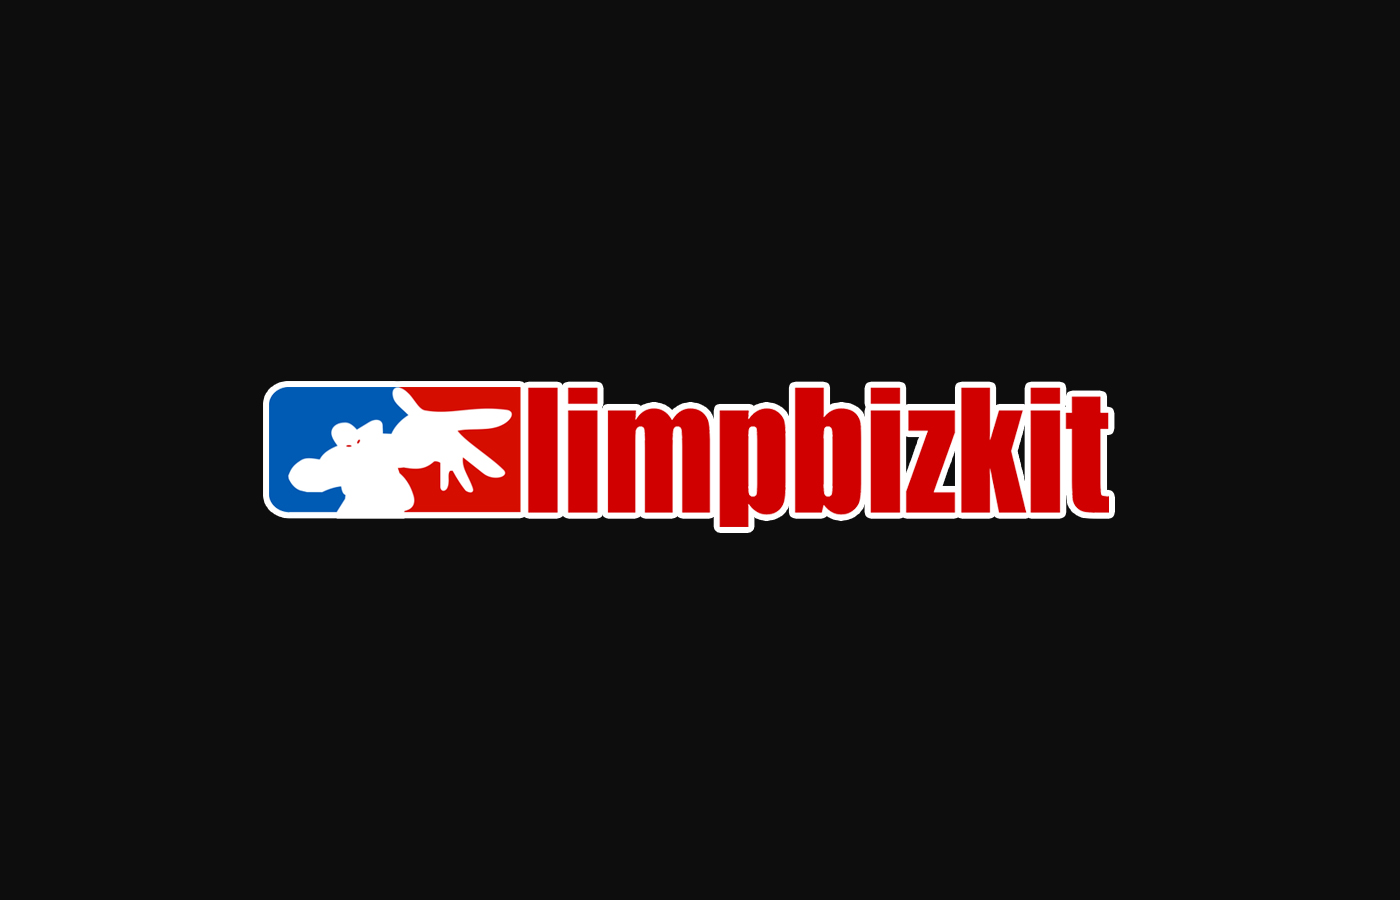 Limp Bizkit Logo Wallpaper Desktop And Background